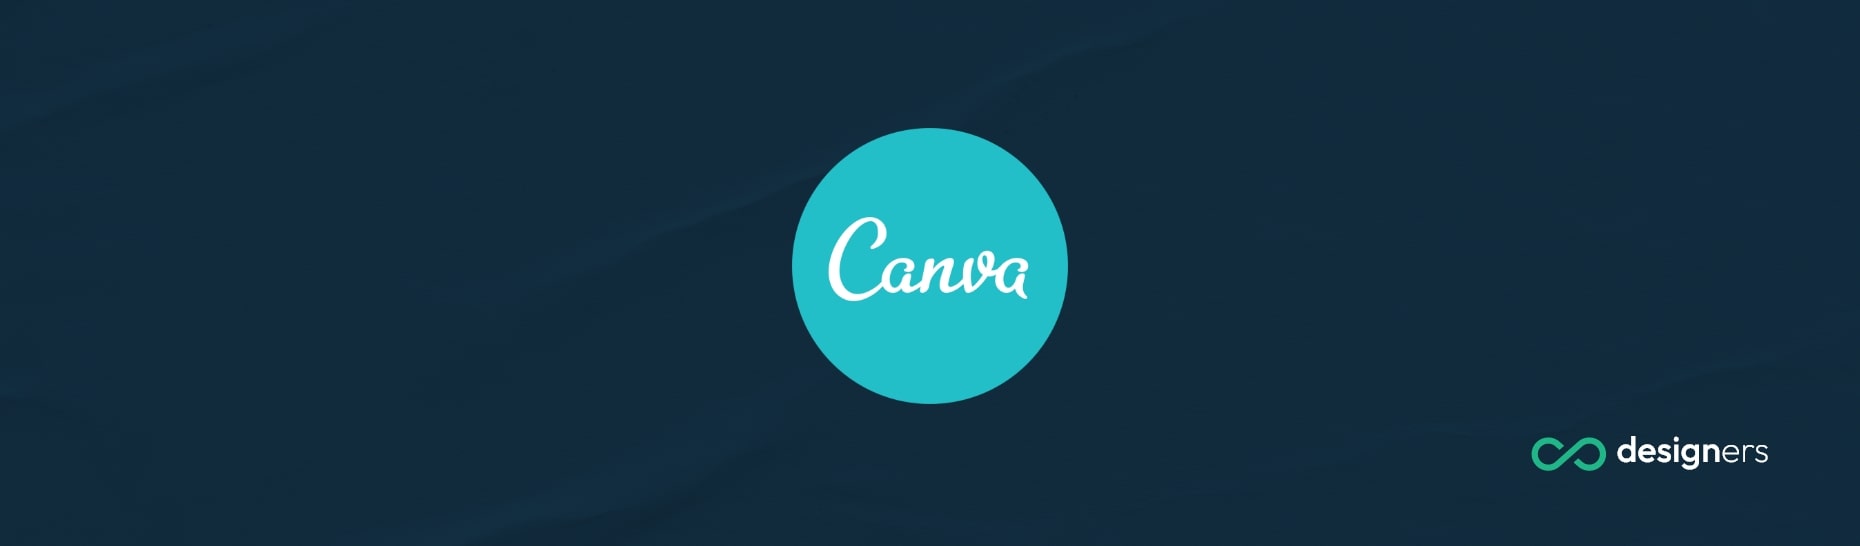 How Do I Make a Transparent Image in Canva?